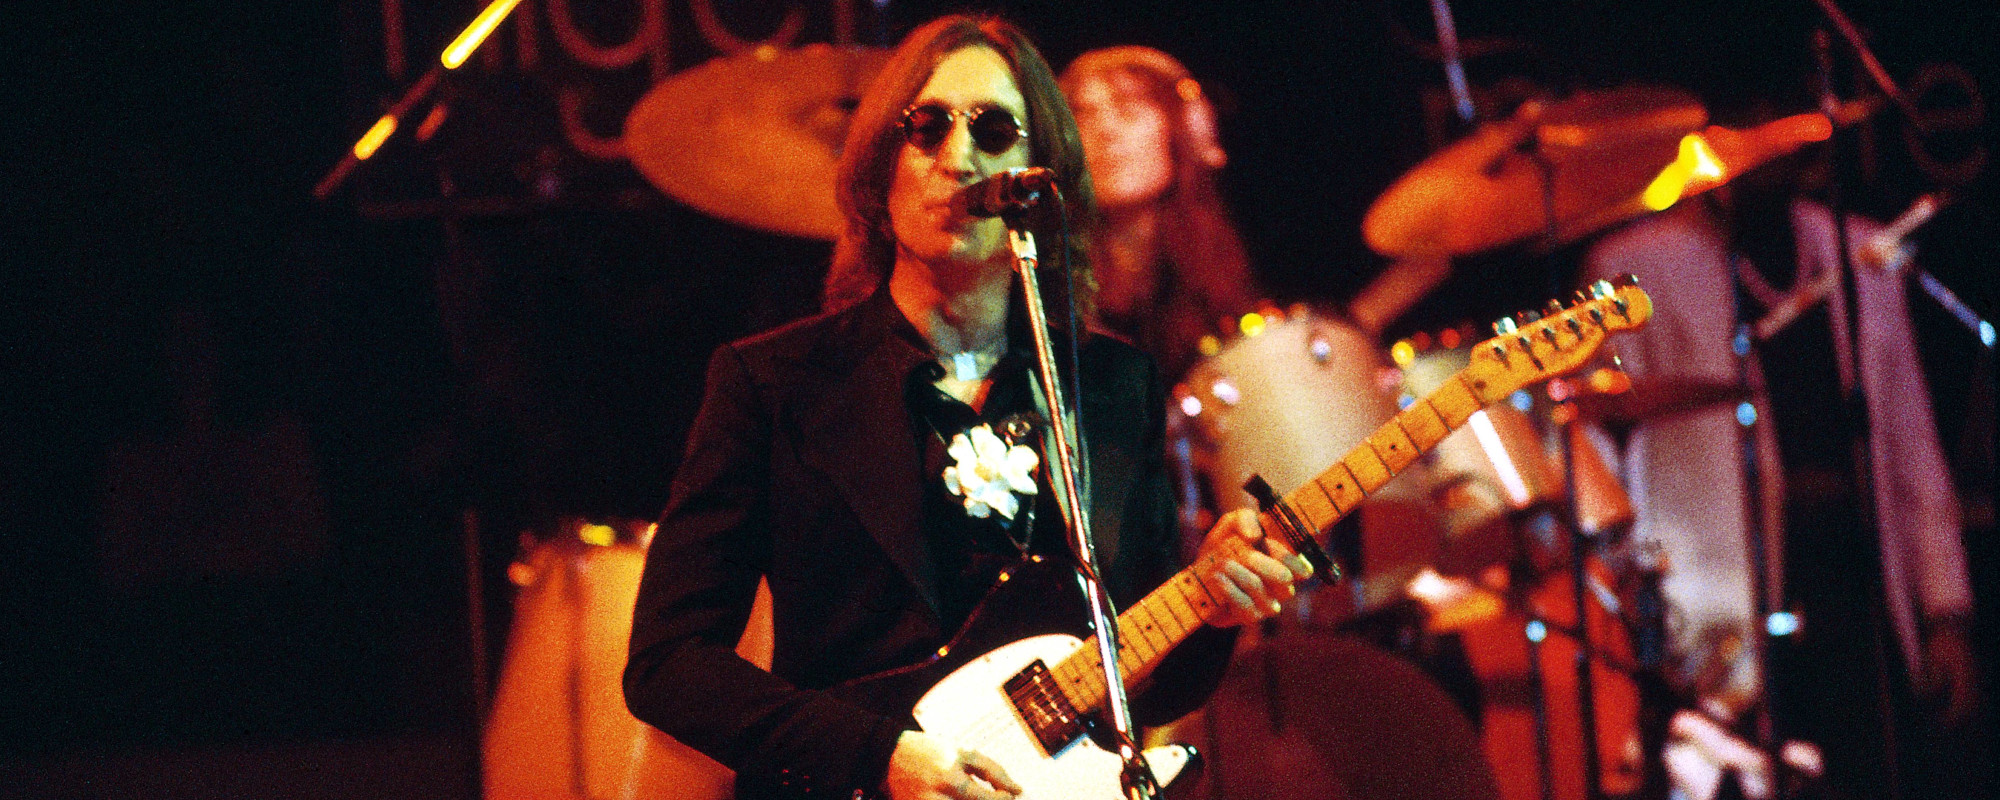 Behind the Album: The Fierce and Brave ‘John Lennon/Plastic Ono Band’ by John Lennon